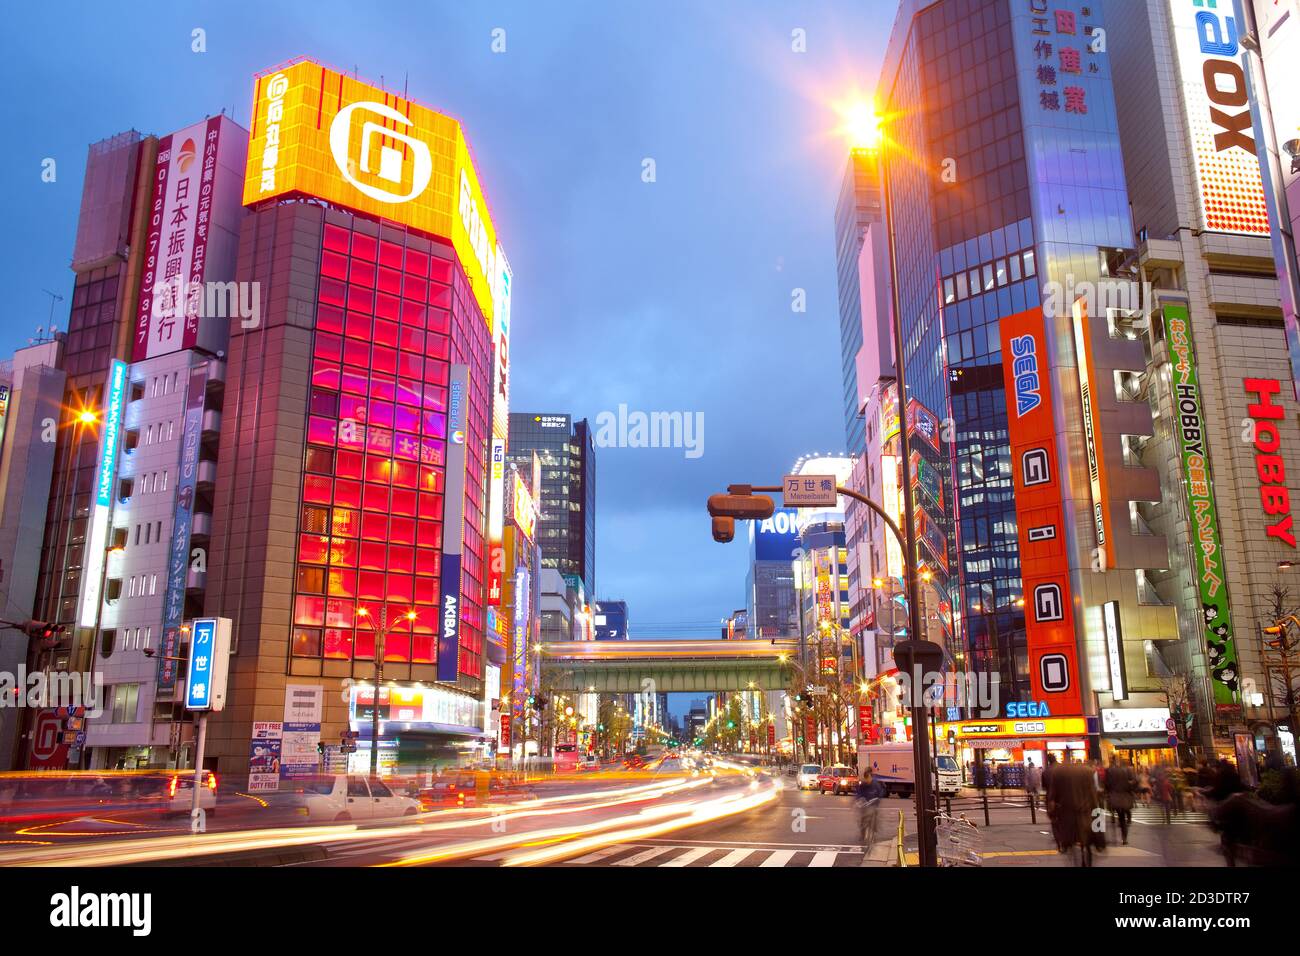 Akihabara Electric Town, Tokyo, Kanto Region, Honshu, Japan - Advertising billboards and traffic. Stock Photo